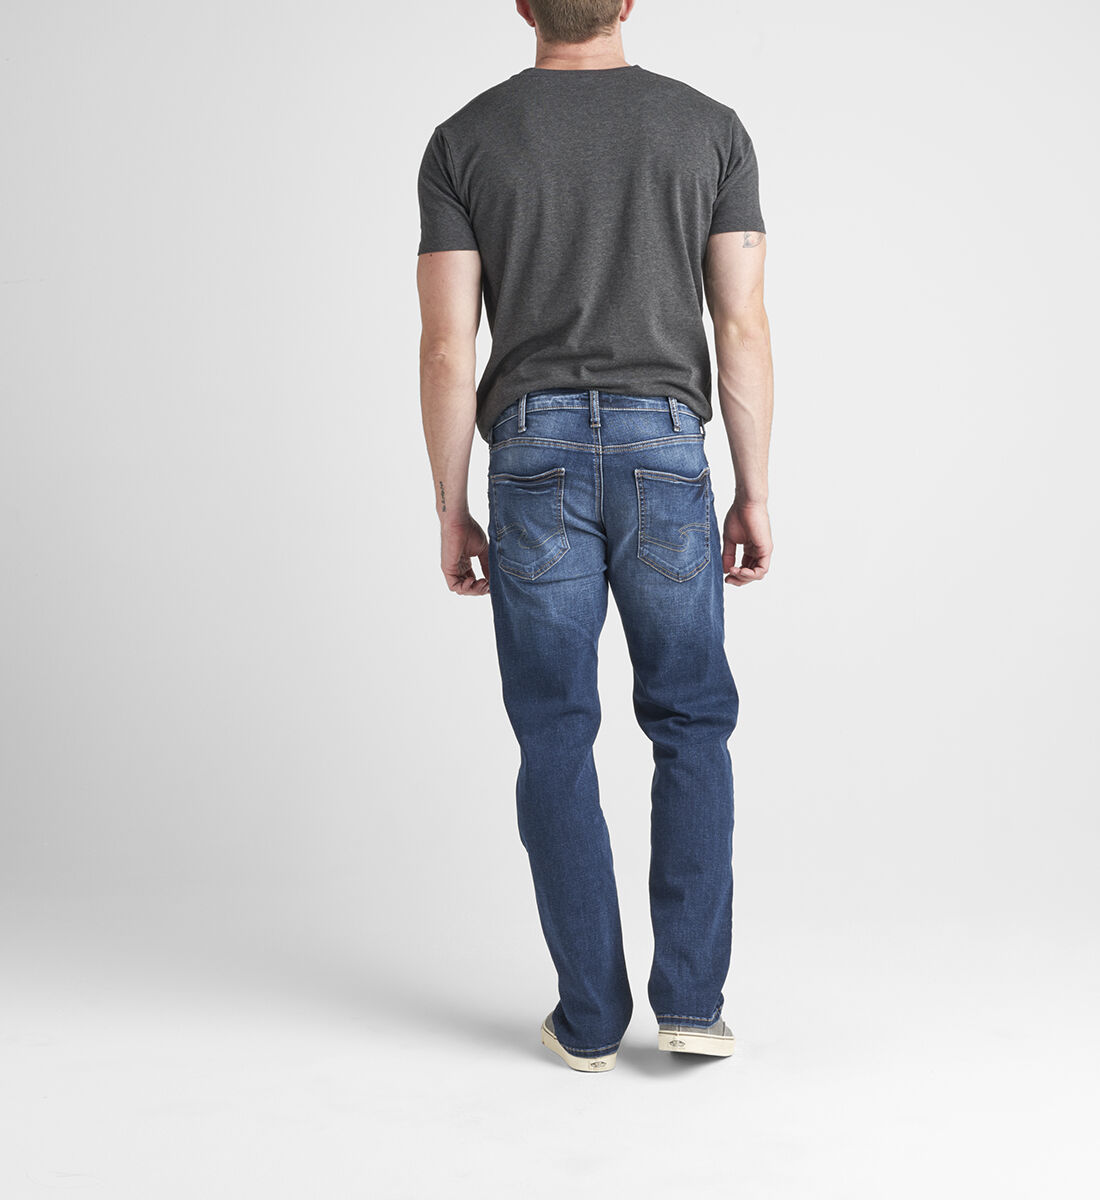 Men's Essential Jeans | Silver Jeans Co.